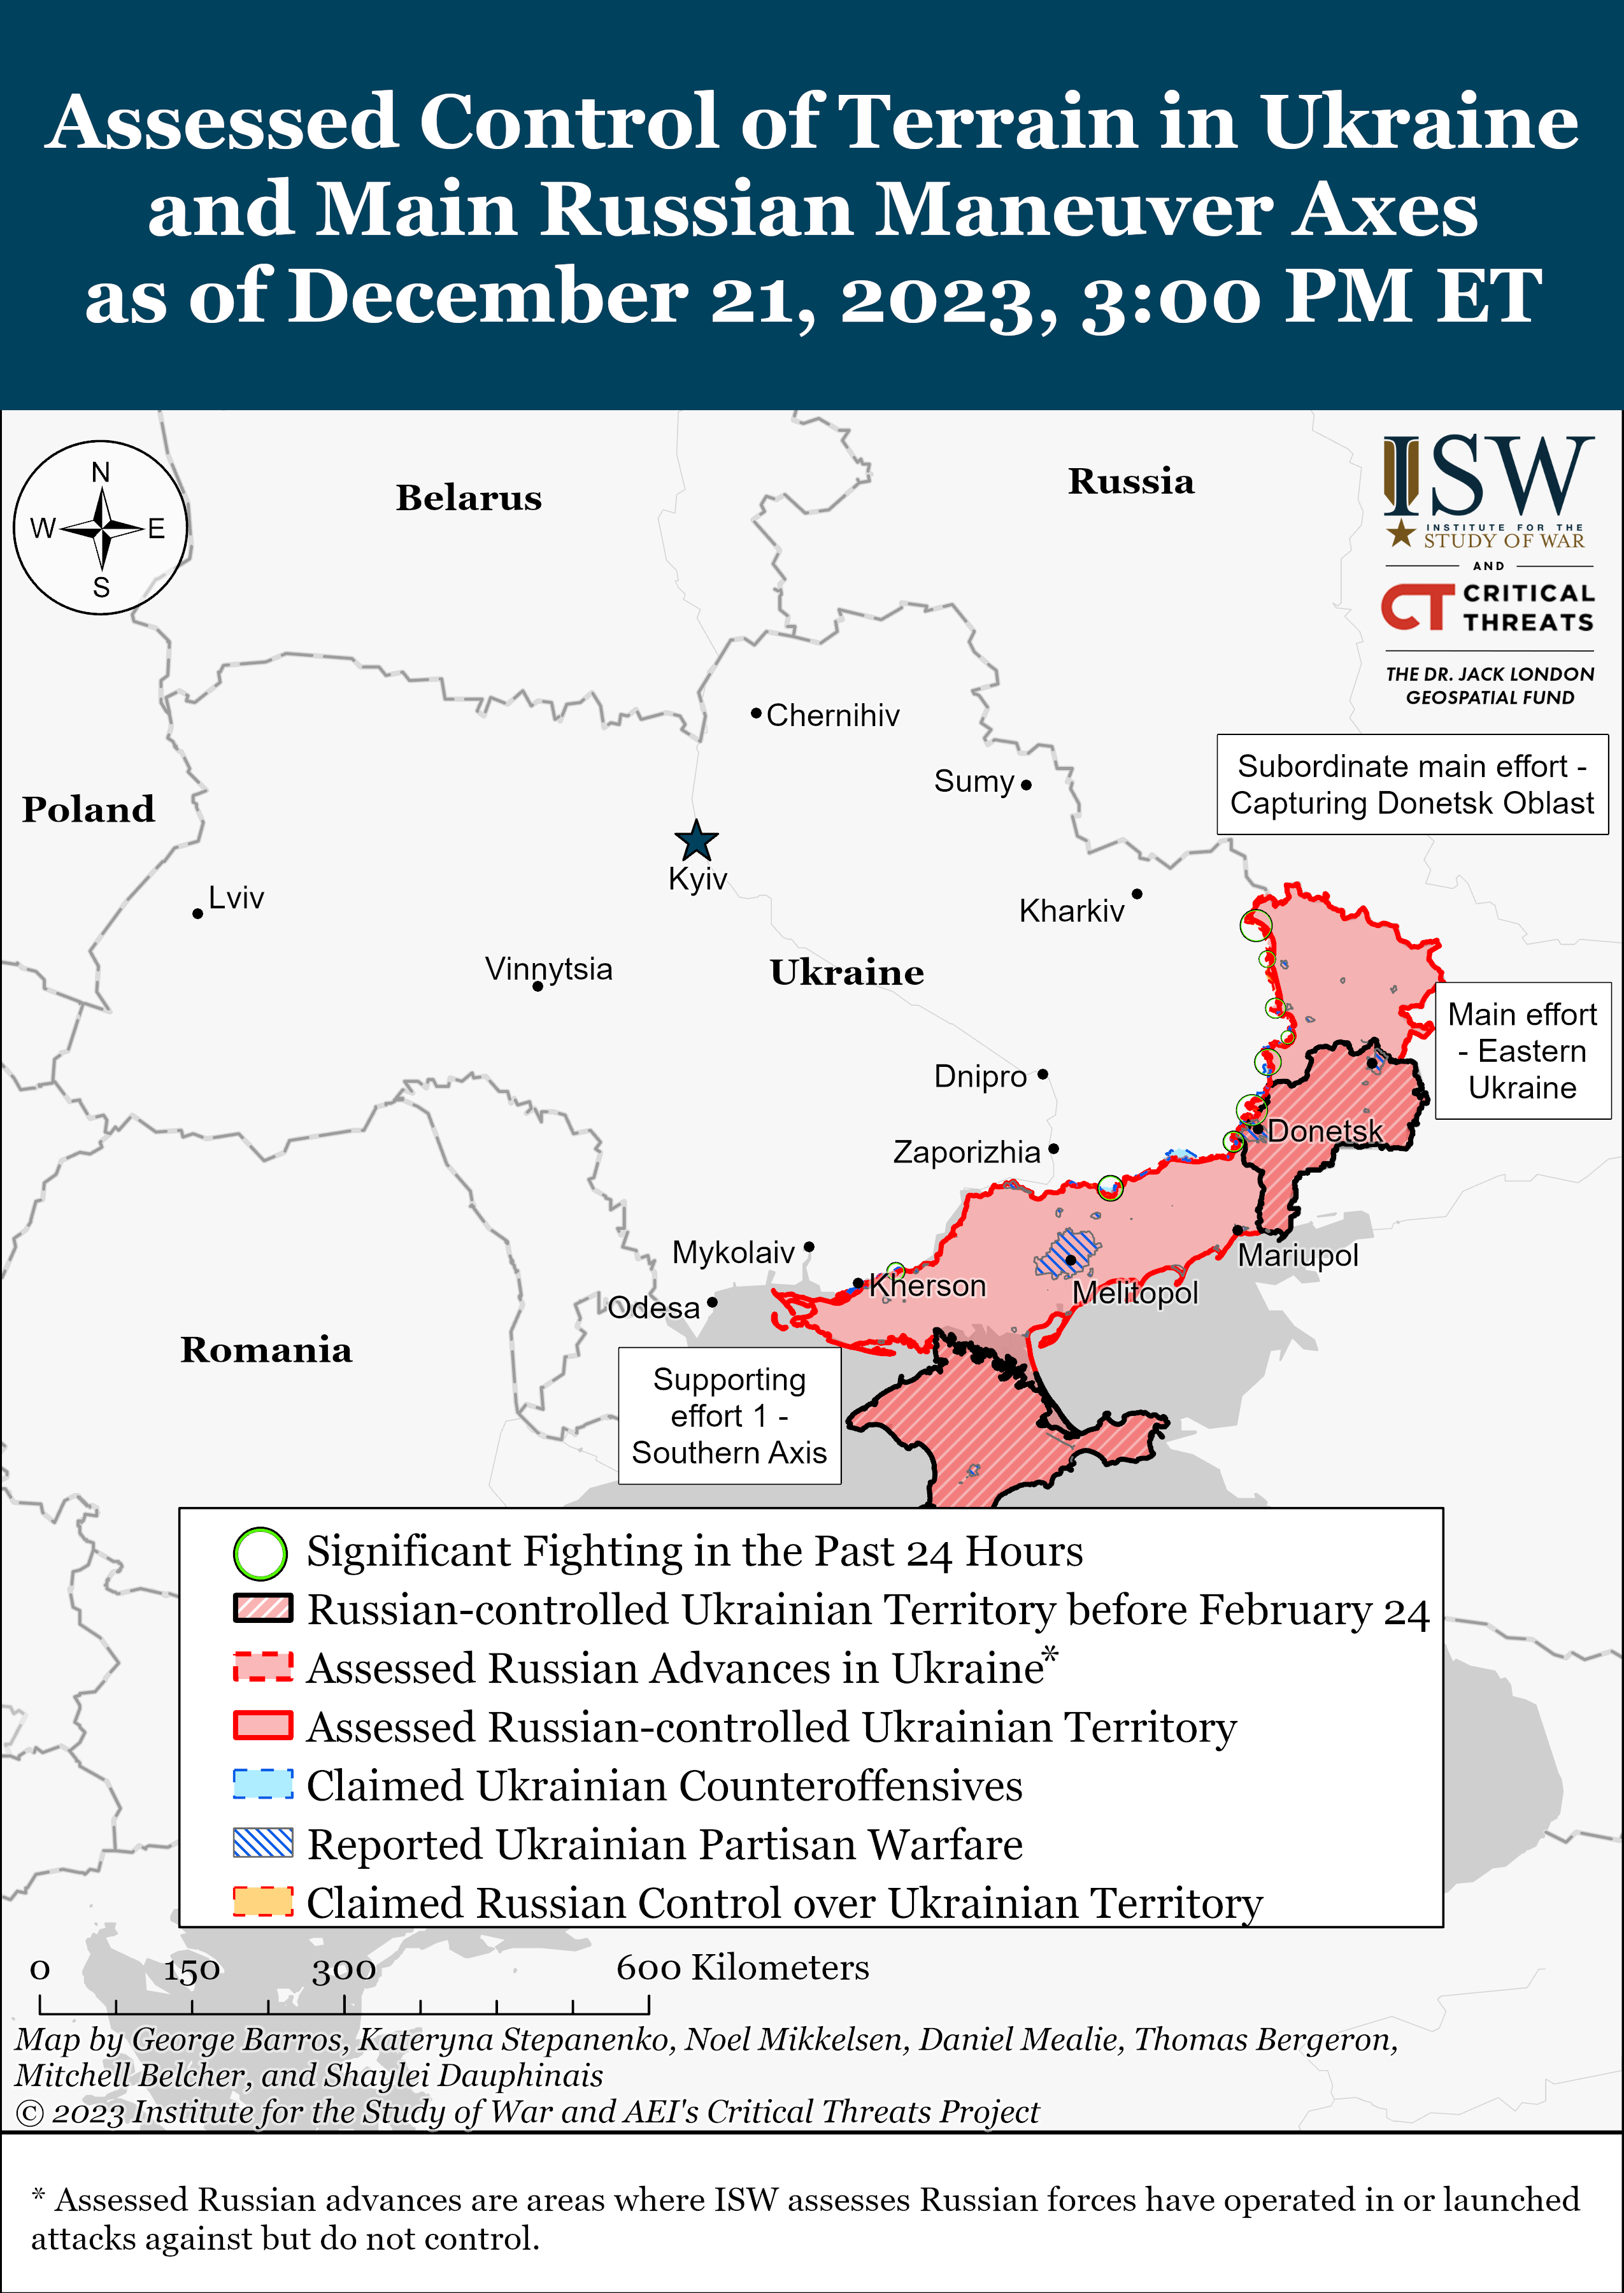 Russian Offensive Campaign Assessment, December 21, 2023